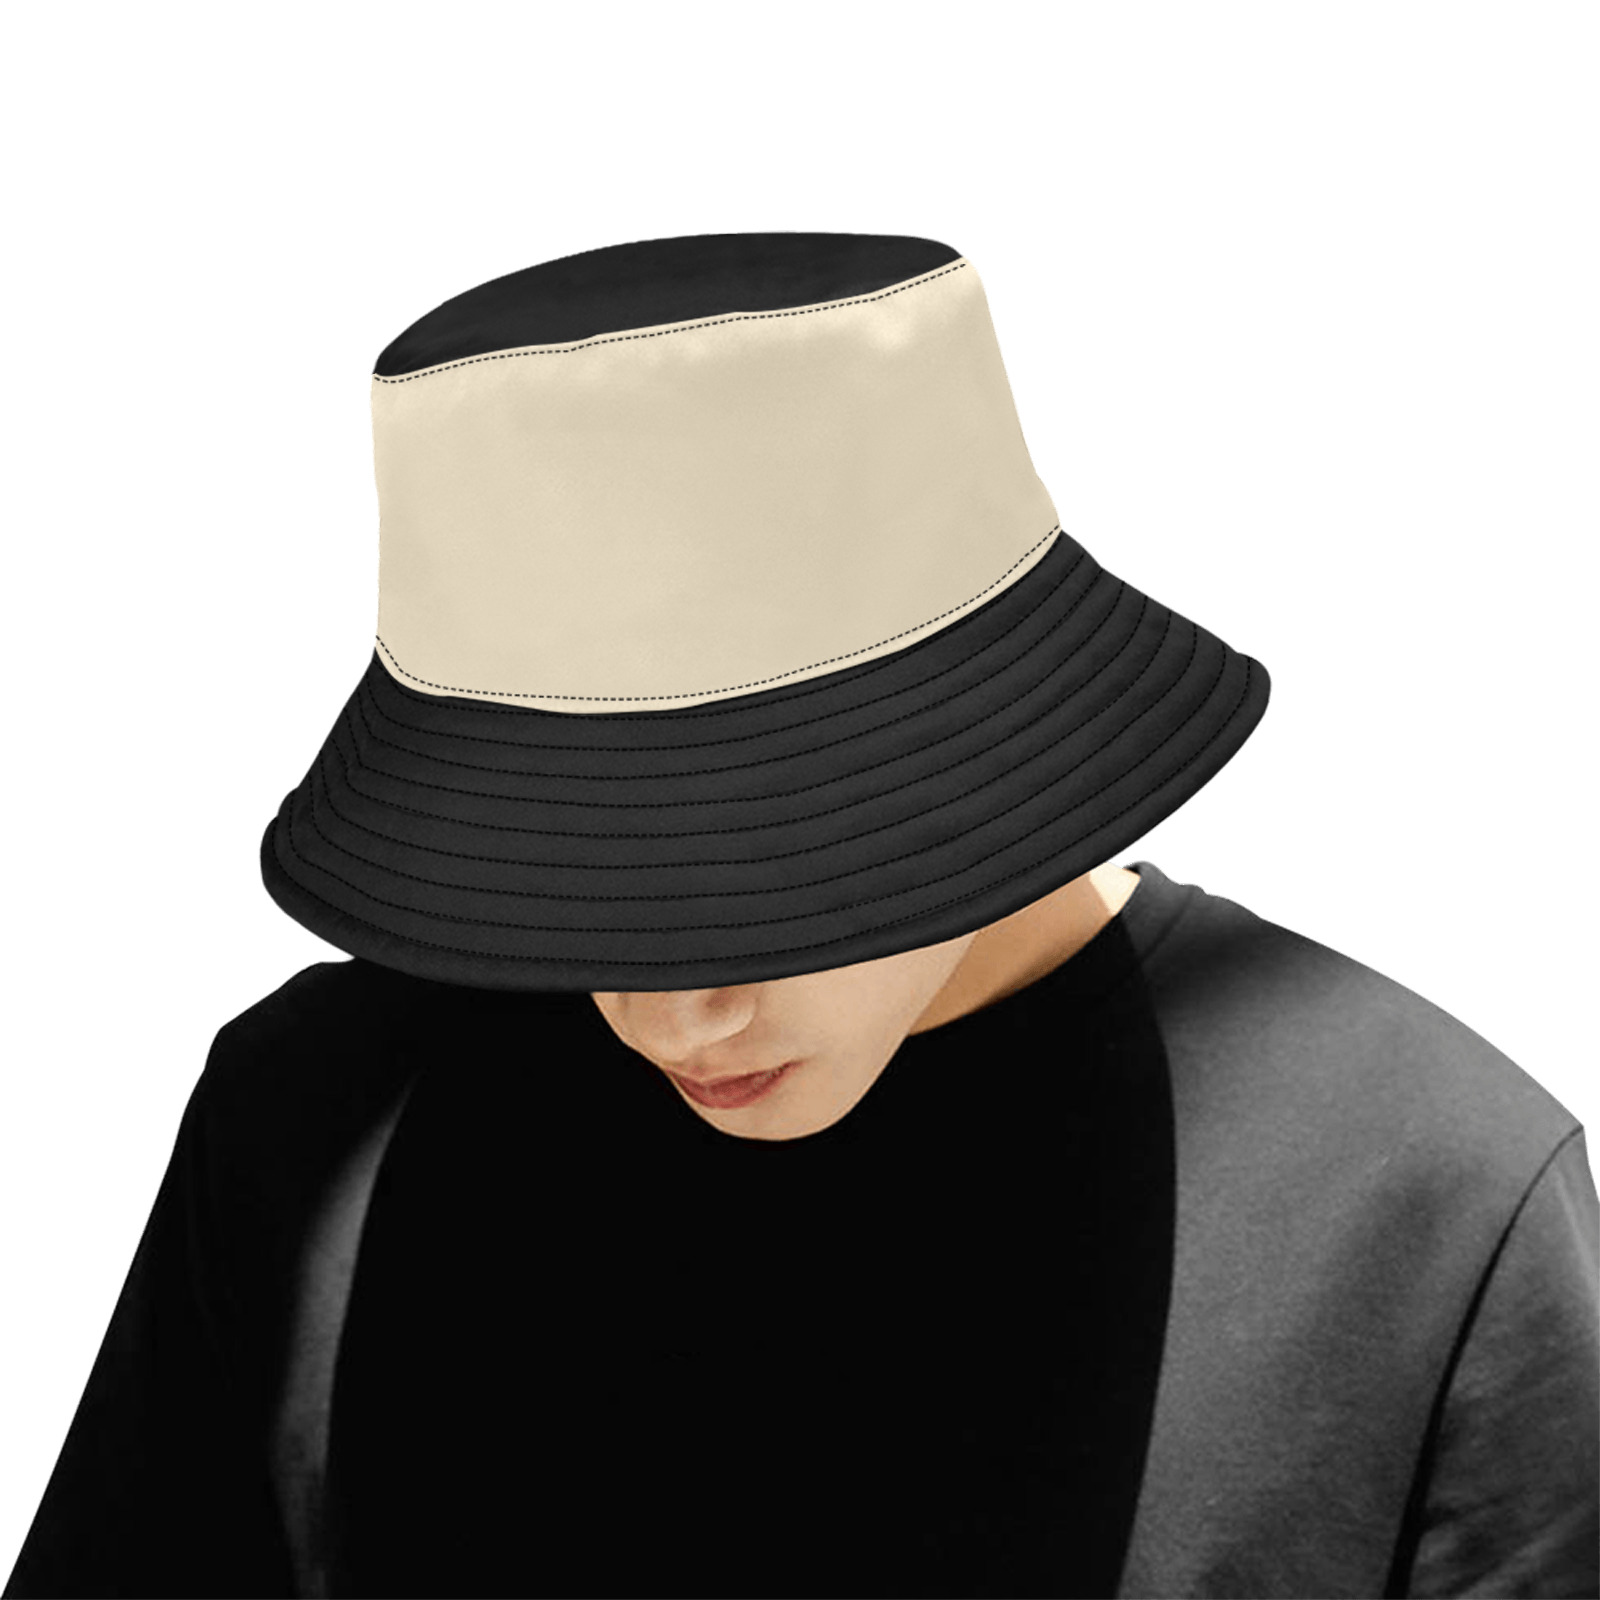 Two Tone Tan/Black Unisex Summer Bucket Hat